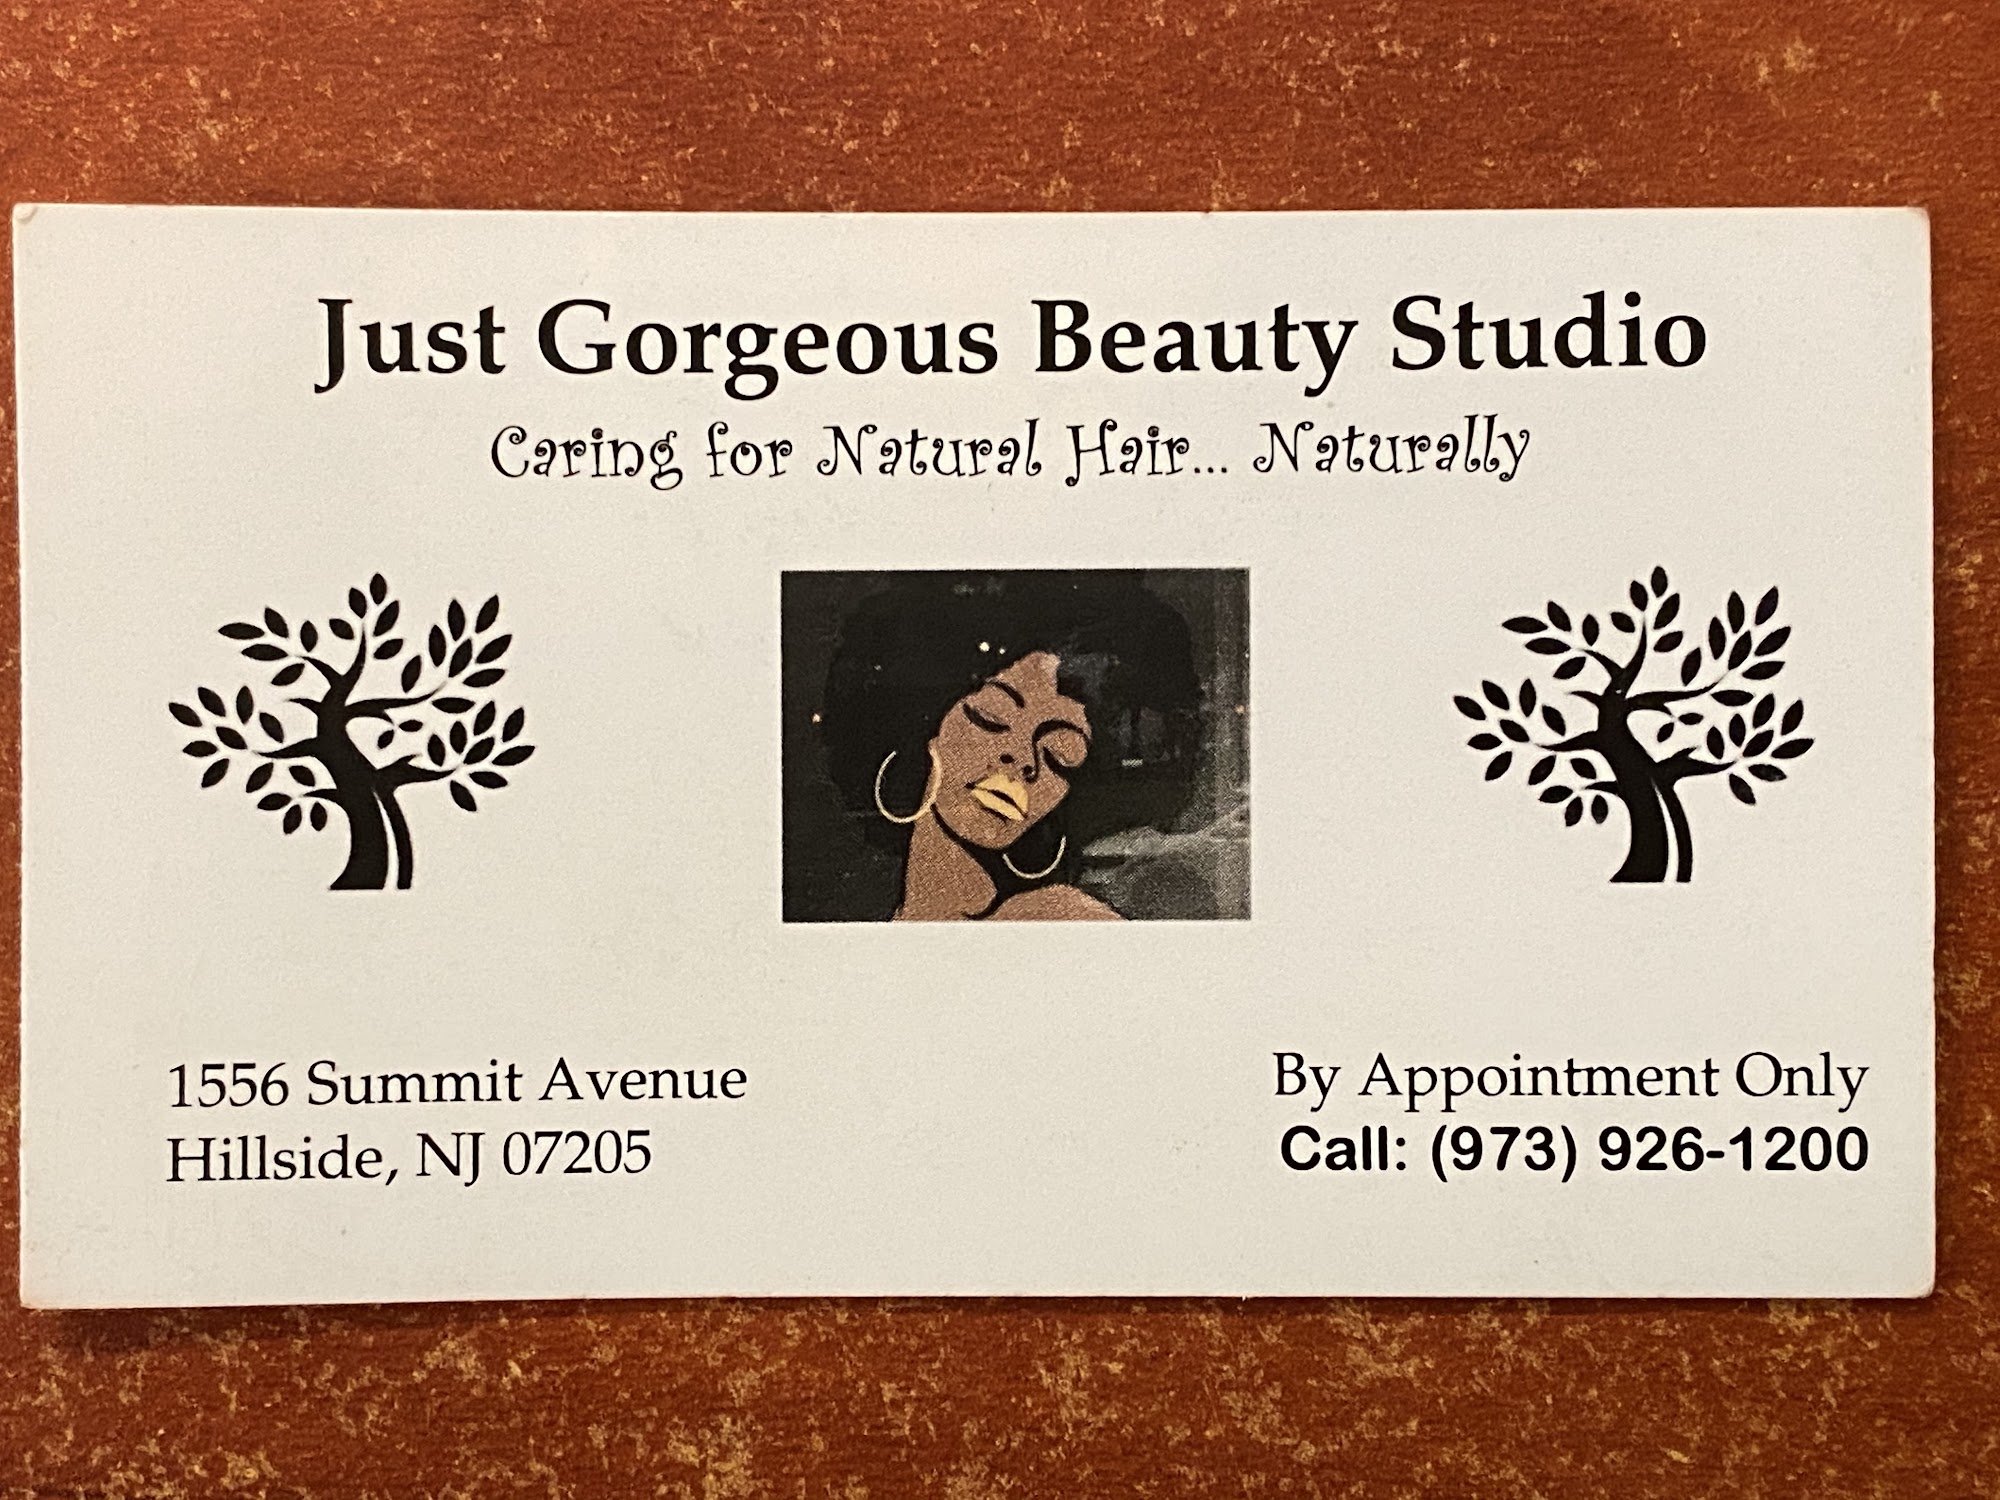 Just Gorgeous Beauty Studio 1556 Summit Ave, Hillside New Jersey 07205